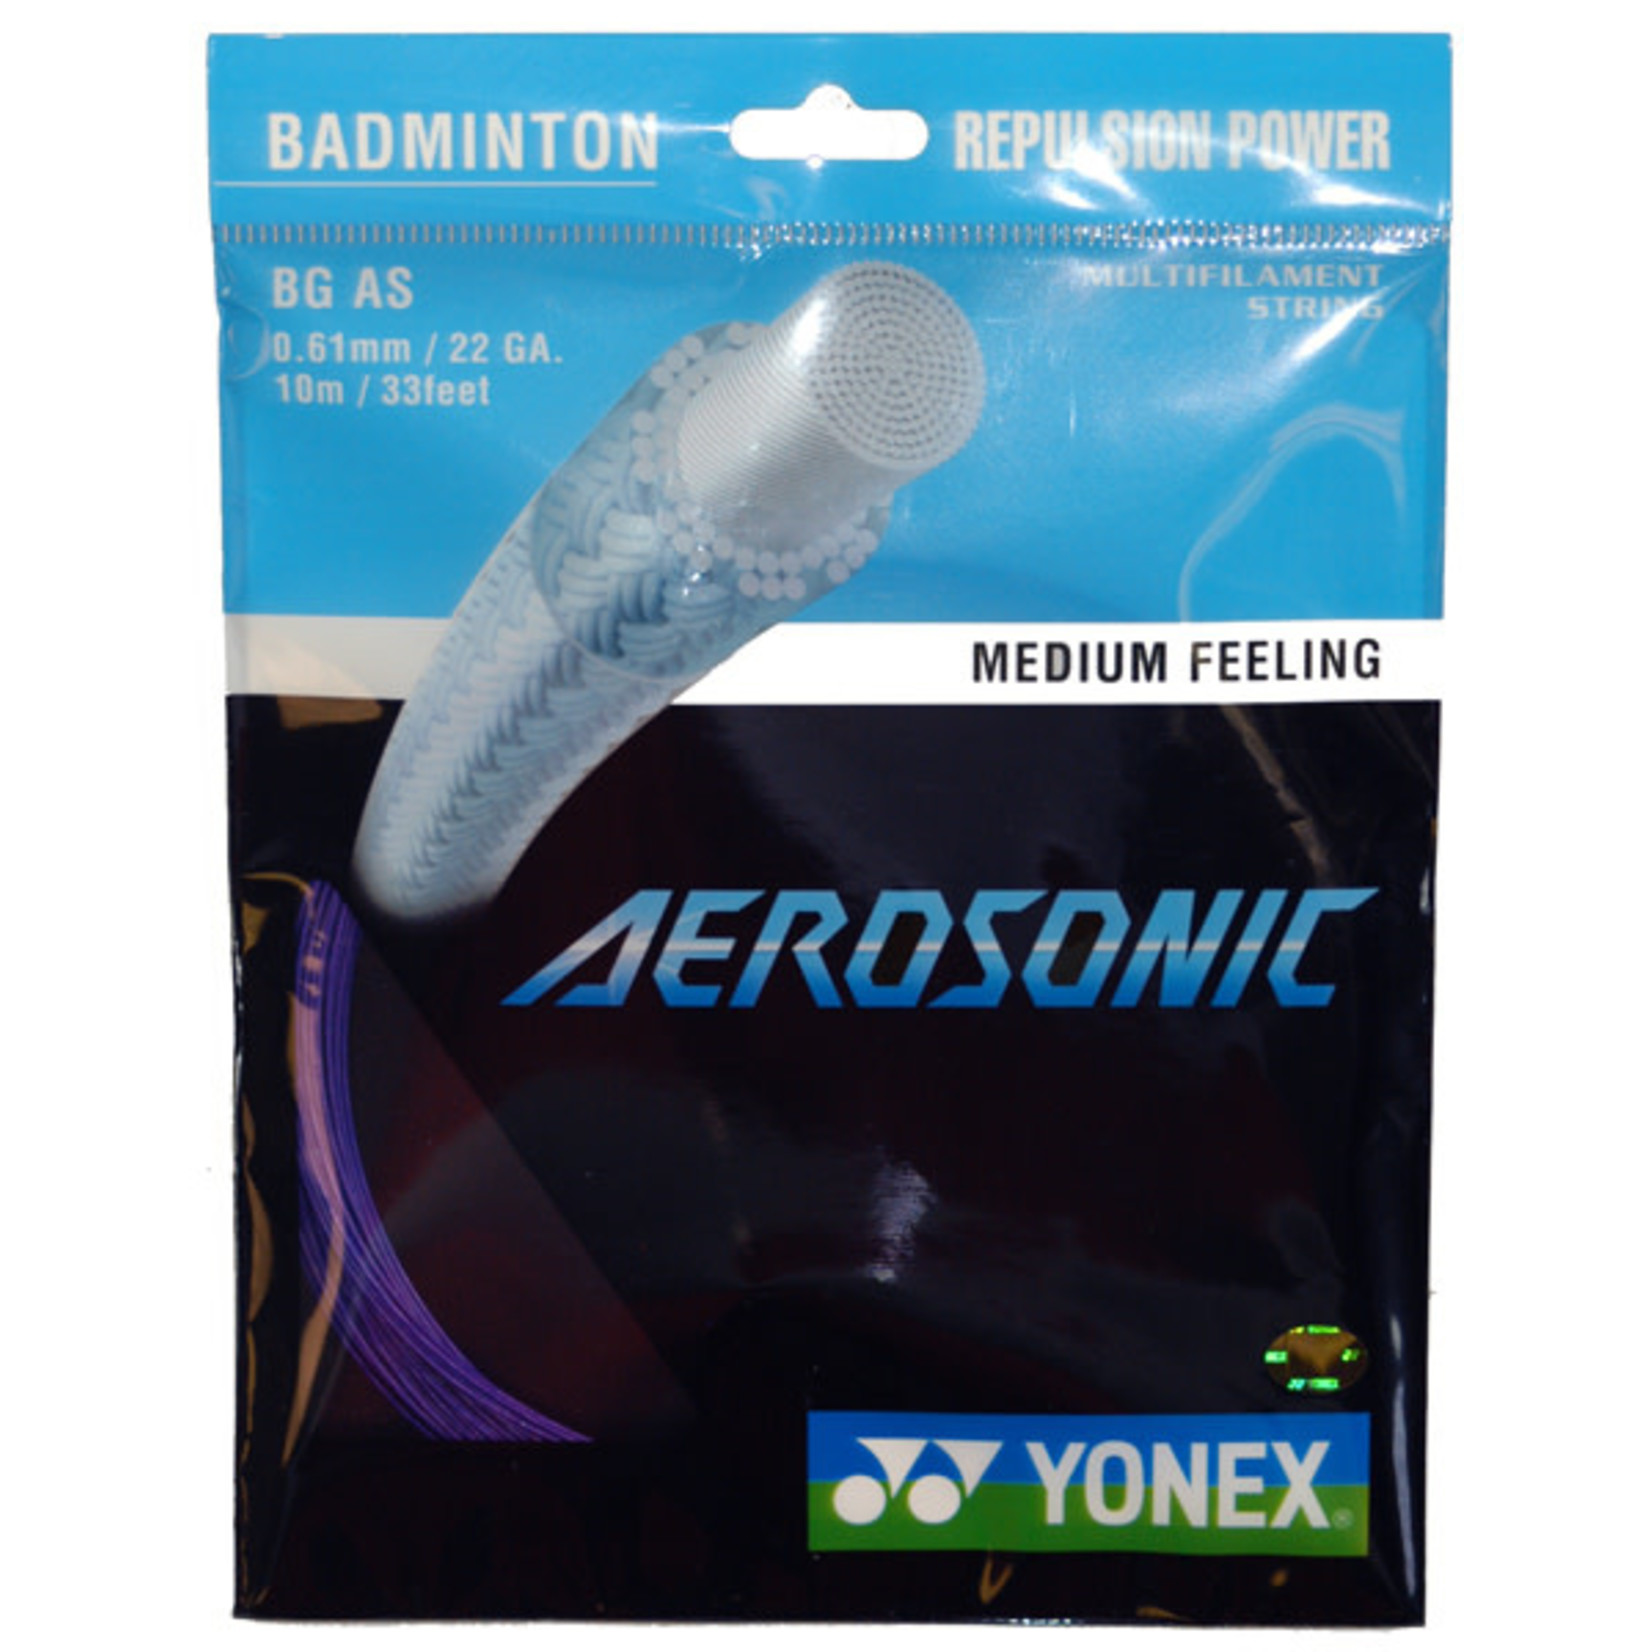 Yonex Yonex Aerosonic Badminton Strings